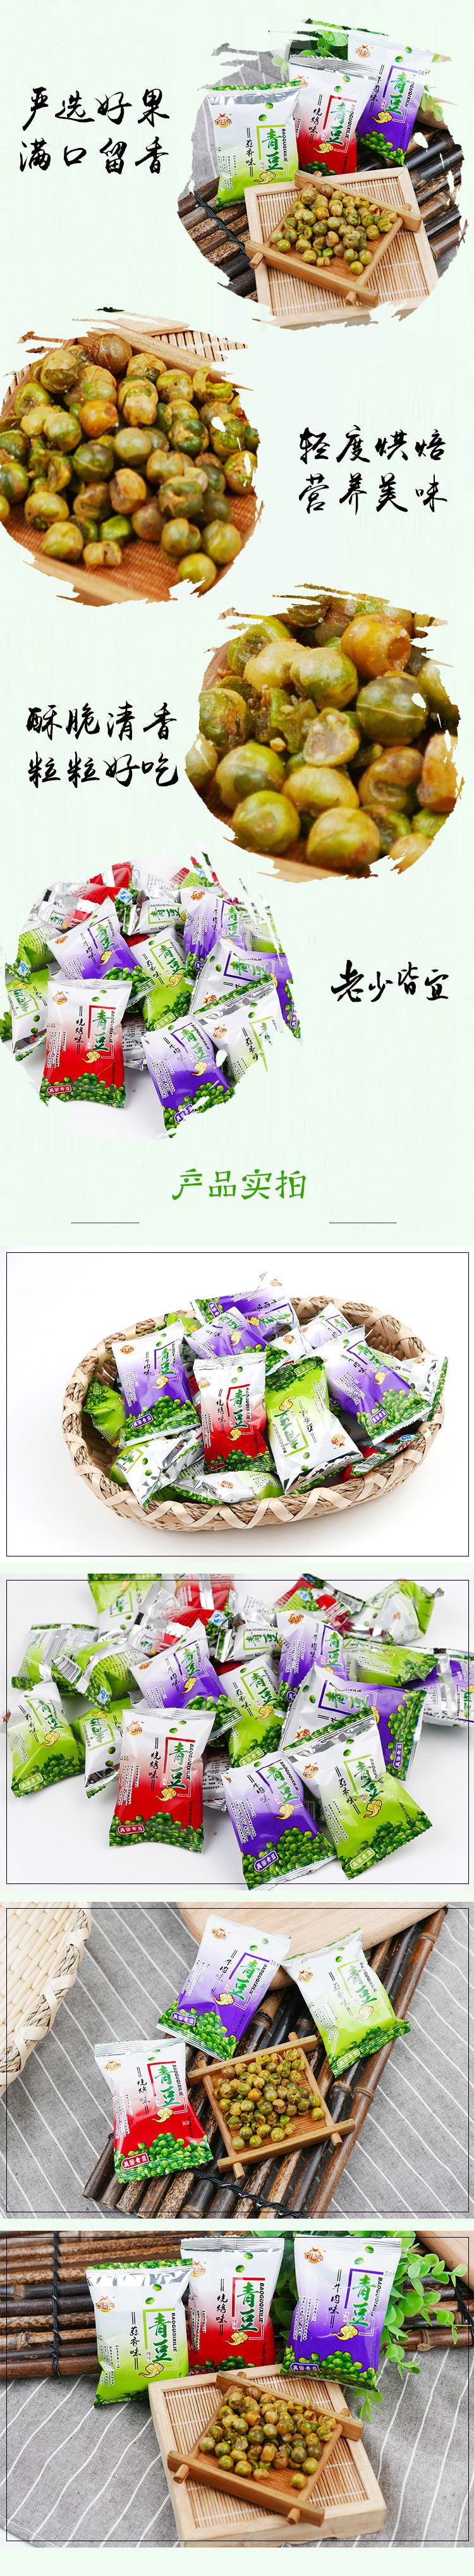 S919宝谷奇 青豆小包装豌豆500克（约23-25袋）混合口味（牛肉味+蒜香味+烧烤味）零食休闲食